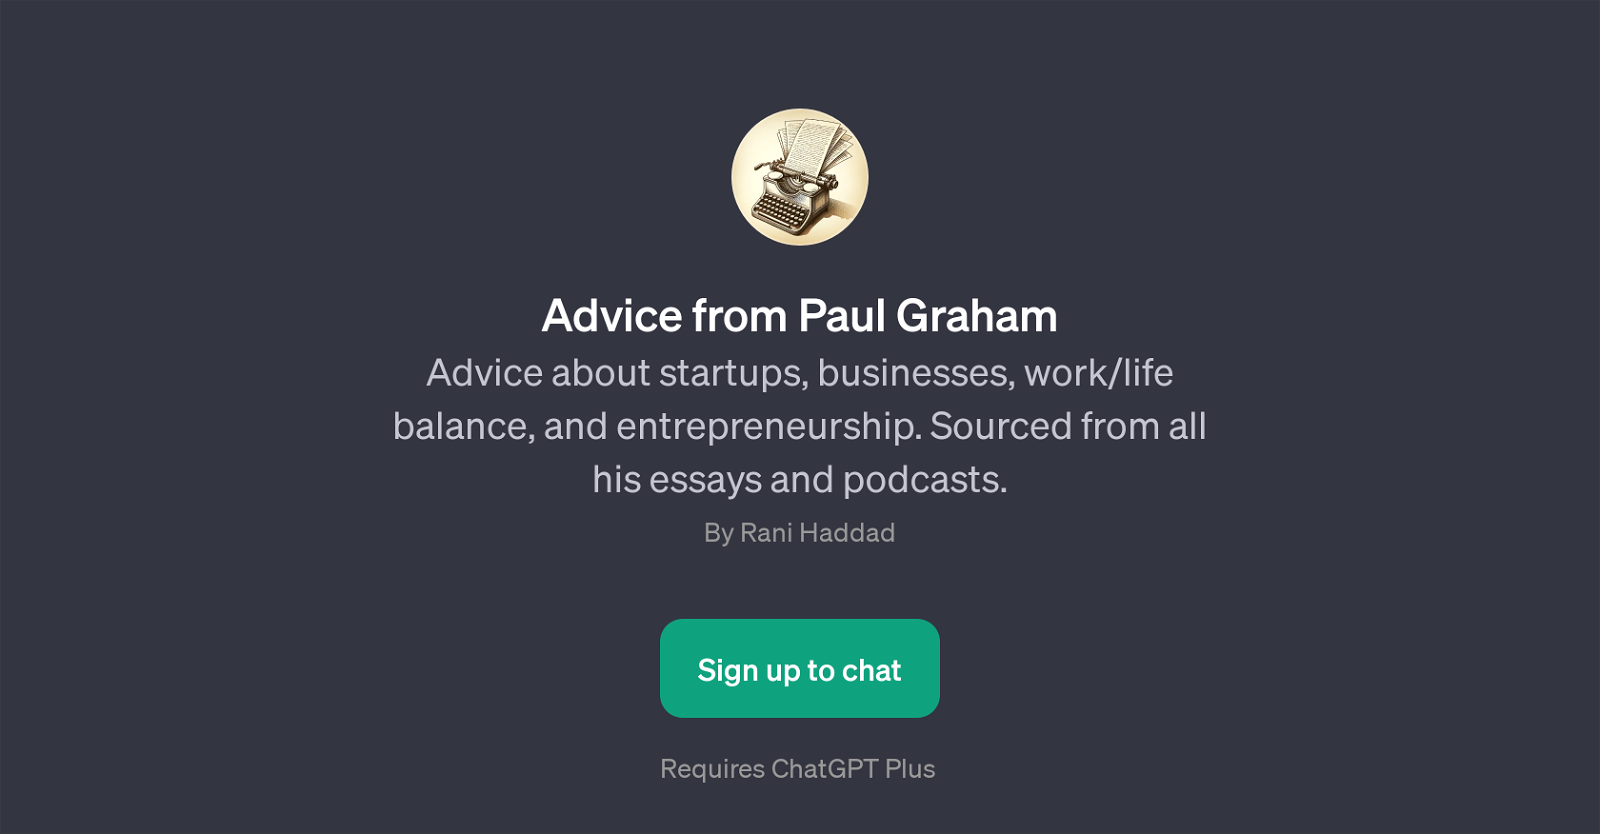 Advice from Paul Graham website